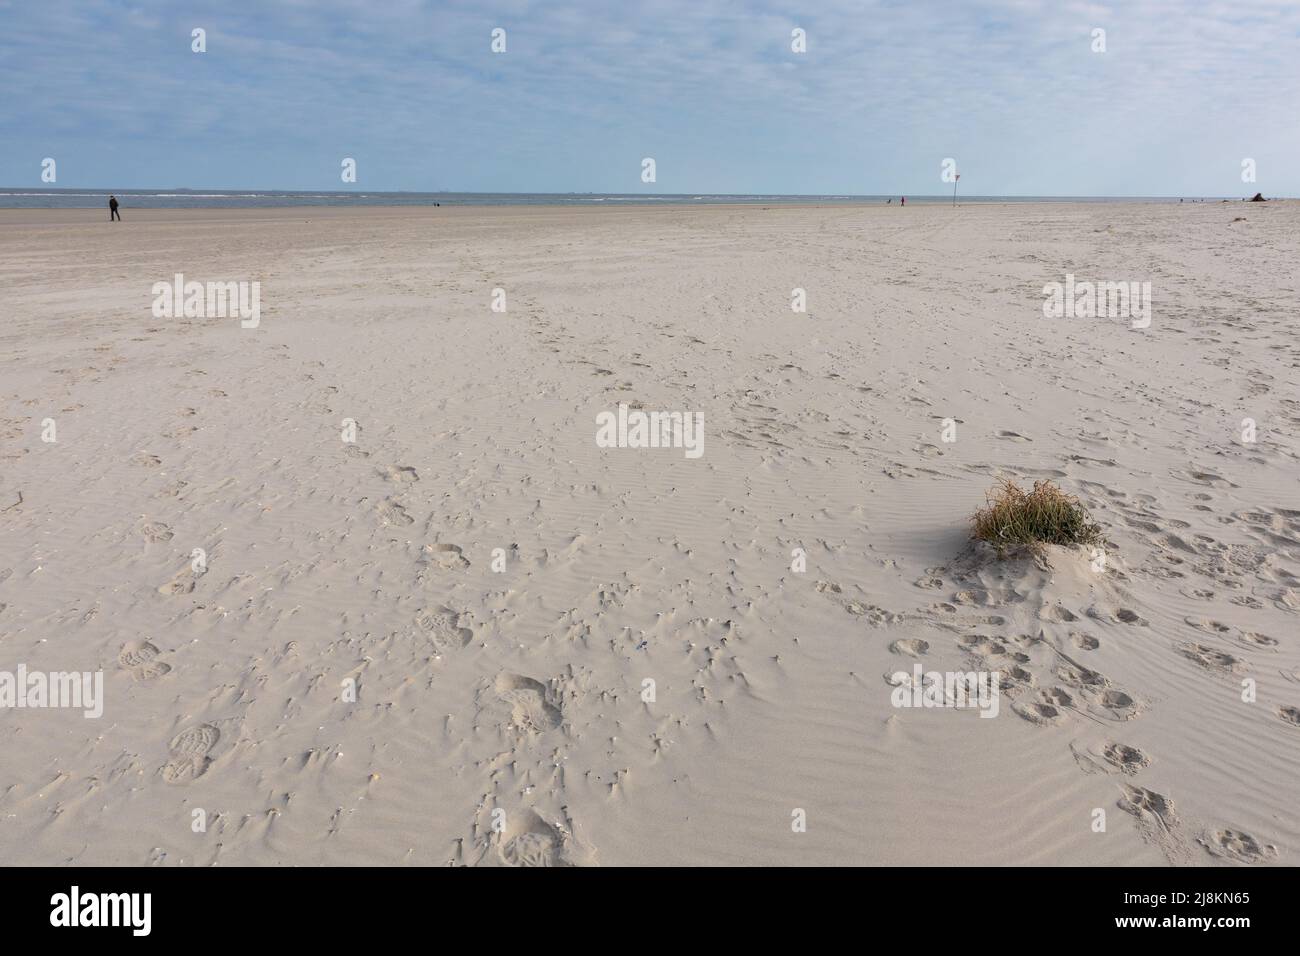 People walking on a lonely sandy beach on Spiekeroog, Germany Stock Photo